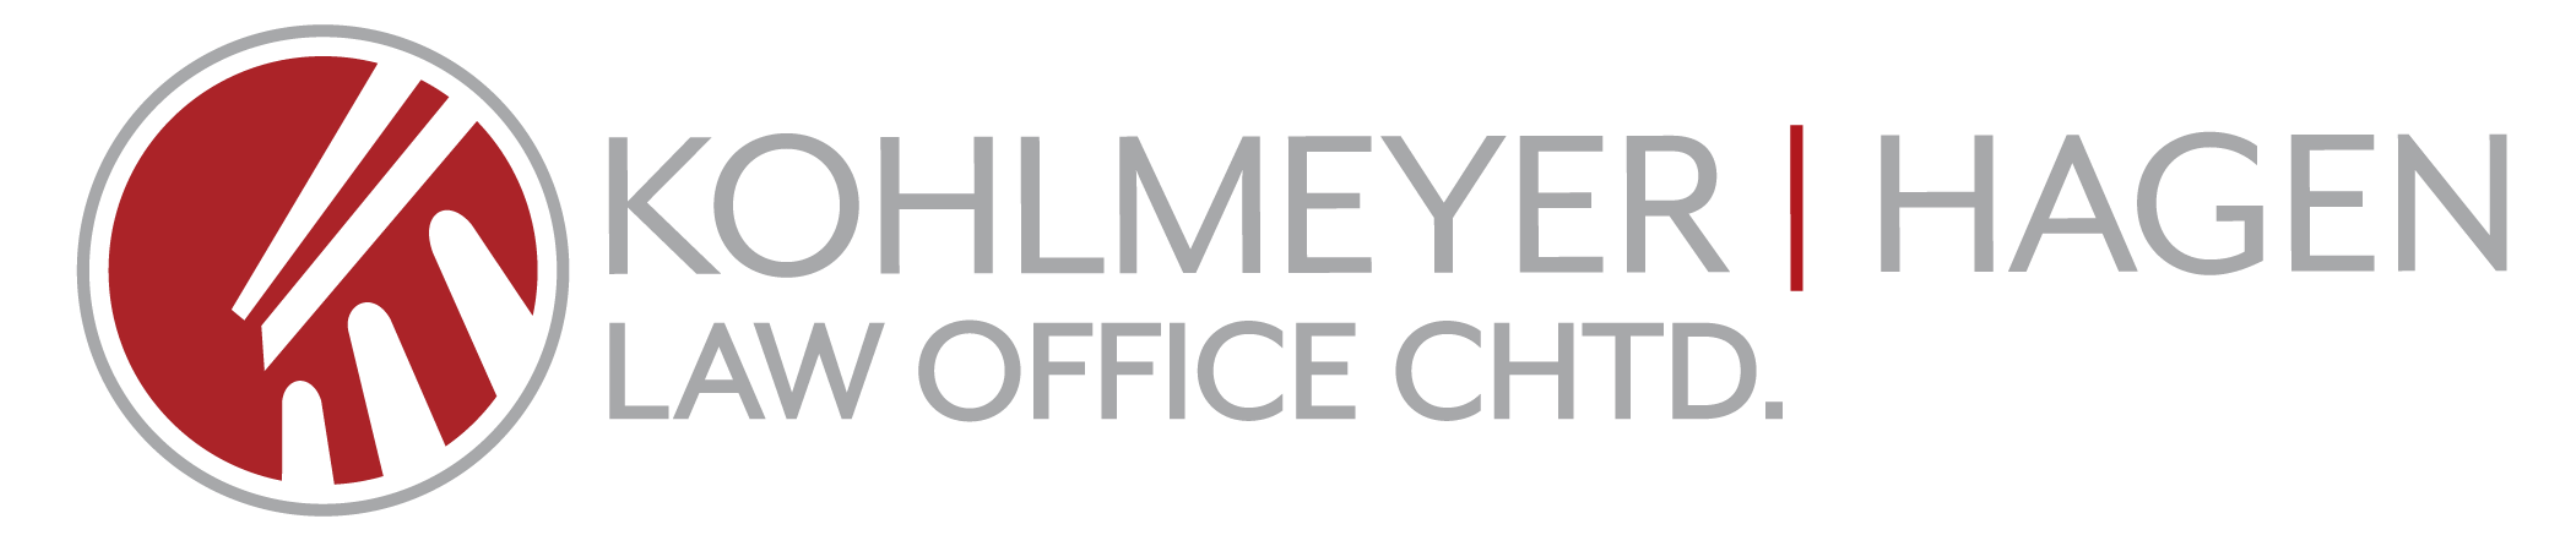 Kohlmeyer Hagen Law Office Chtd Logo